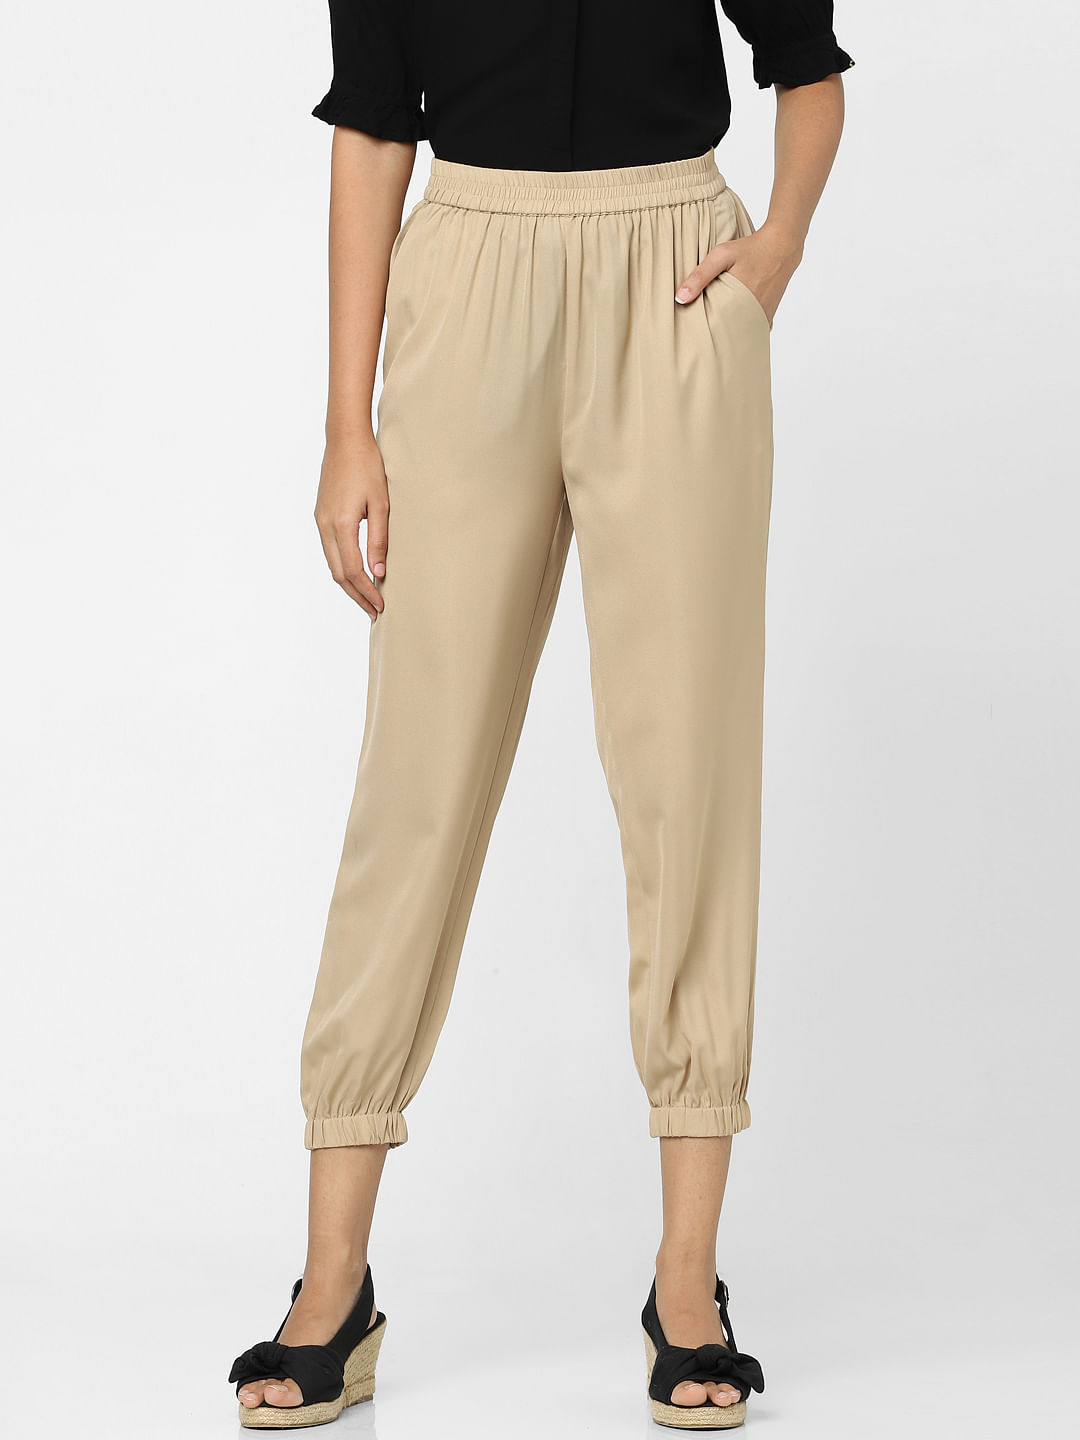 HUPOM Women'S Athletic Pants Womens Pants Suit Slacks High Waist Rise Long  Straight-Leg Khaki 2XL - Walmart.com